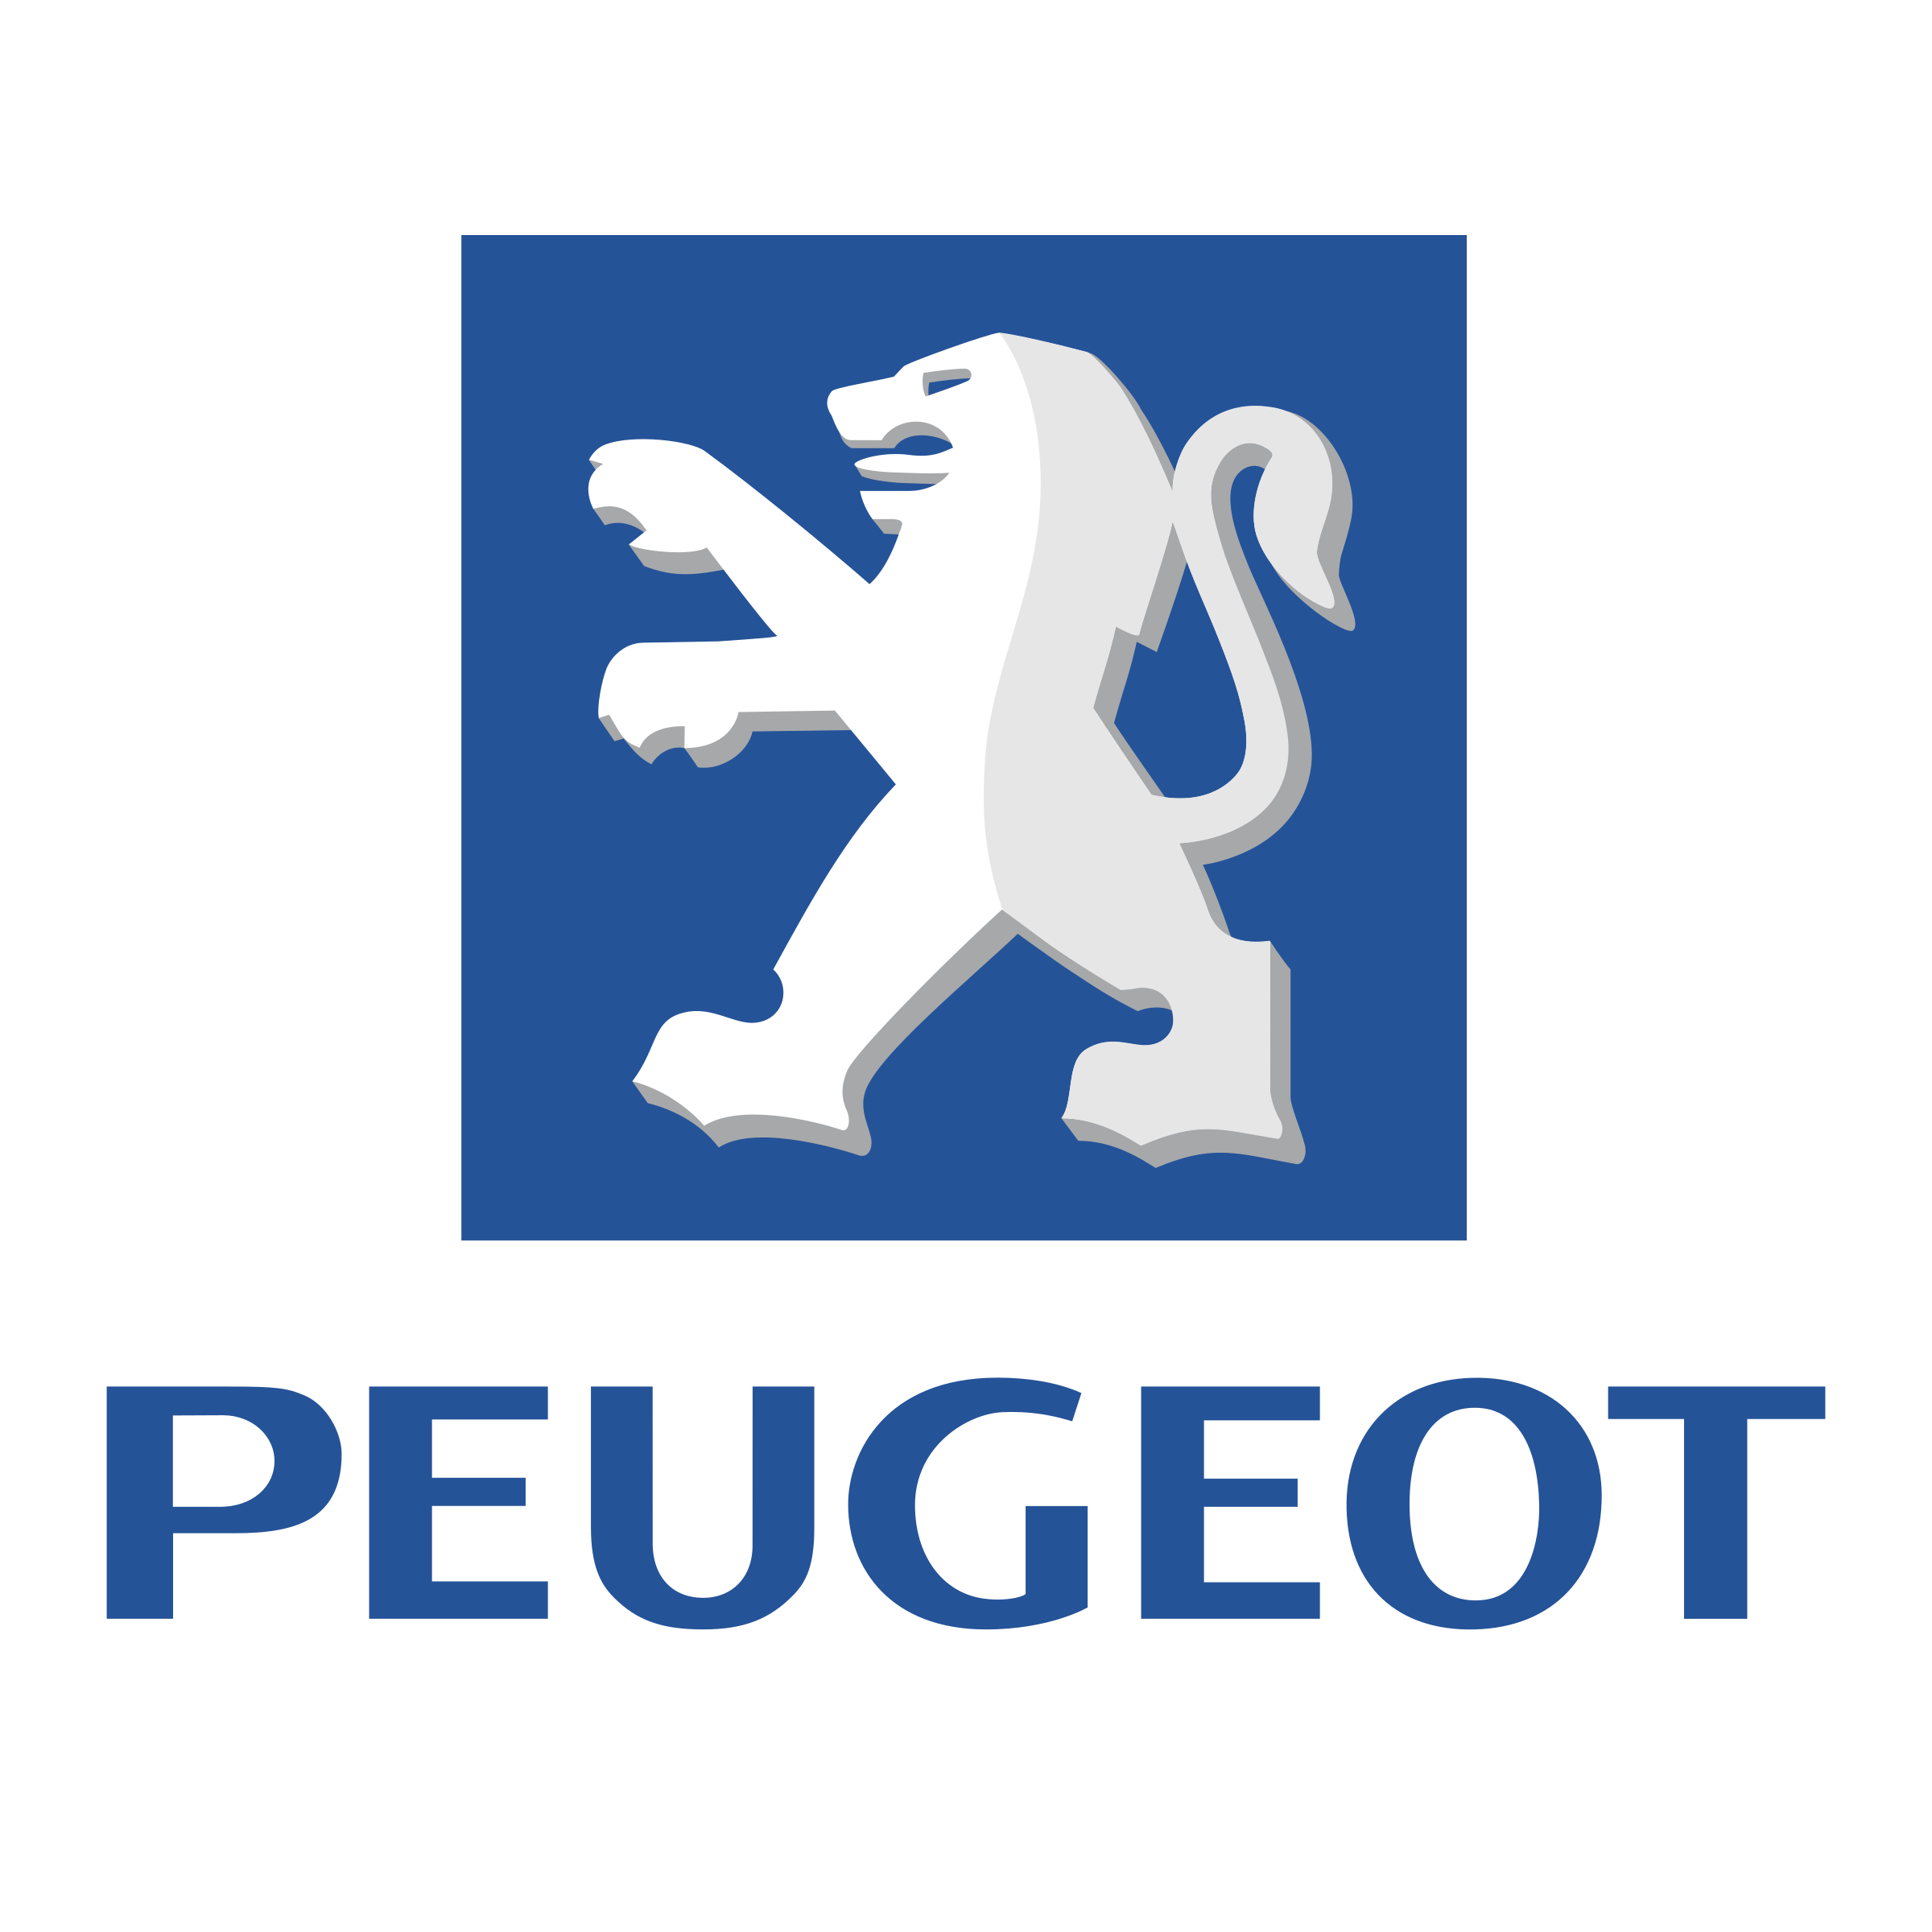 Peugeot Logo PNG Free File Download